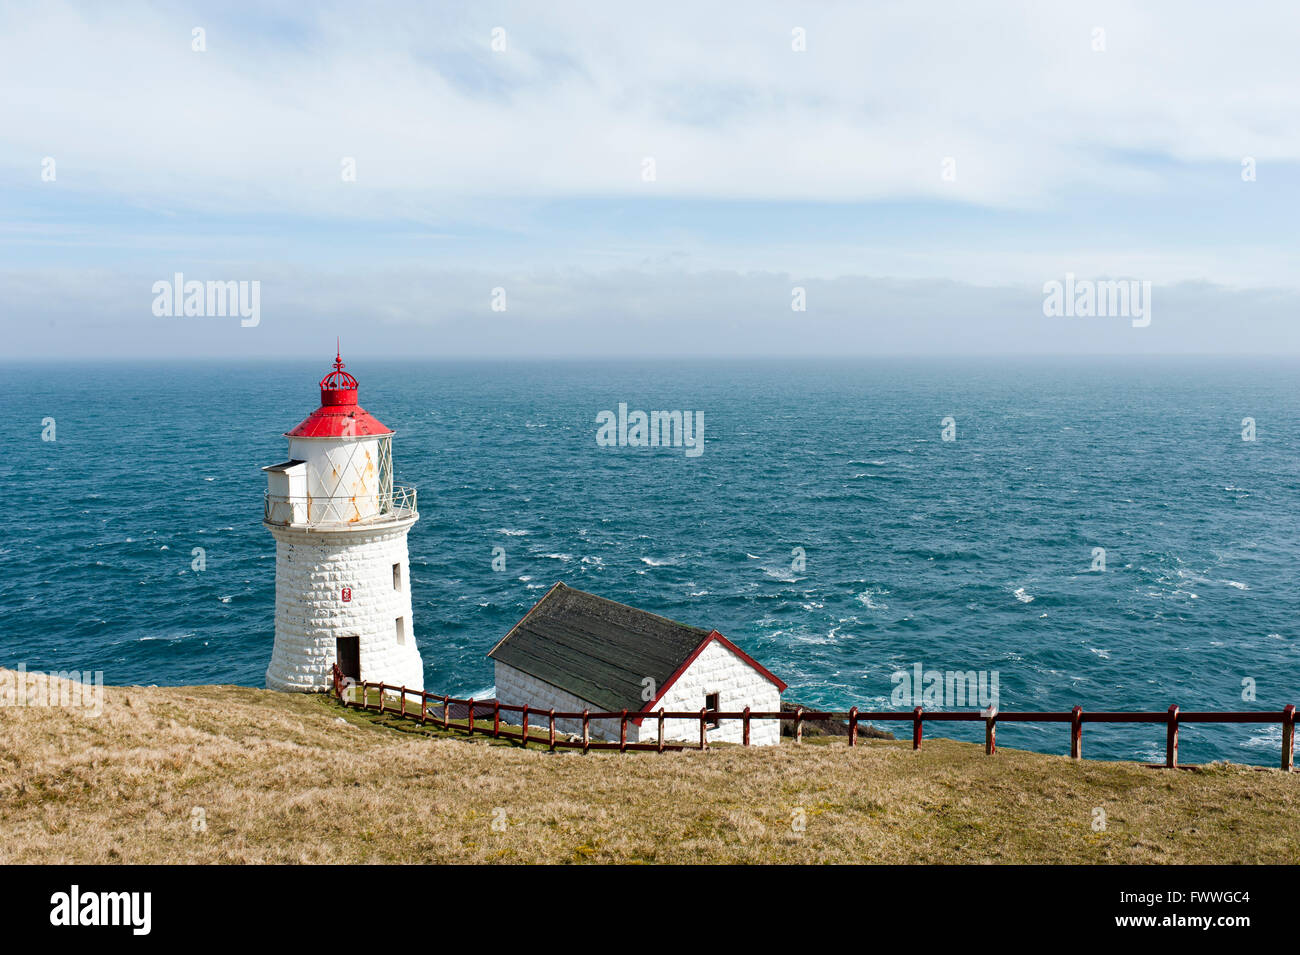 Nolsoy Leuchtturm am Cape Øknastangi, Färöer Inseln, Føroyar, Atlantik, Dänemark Stockfoto